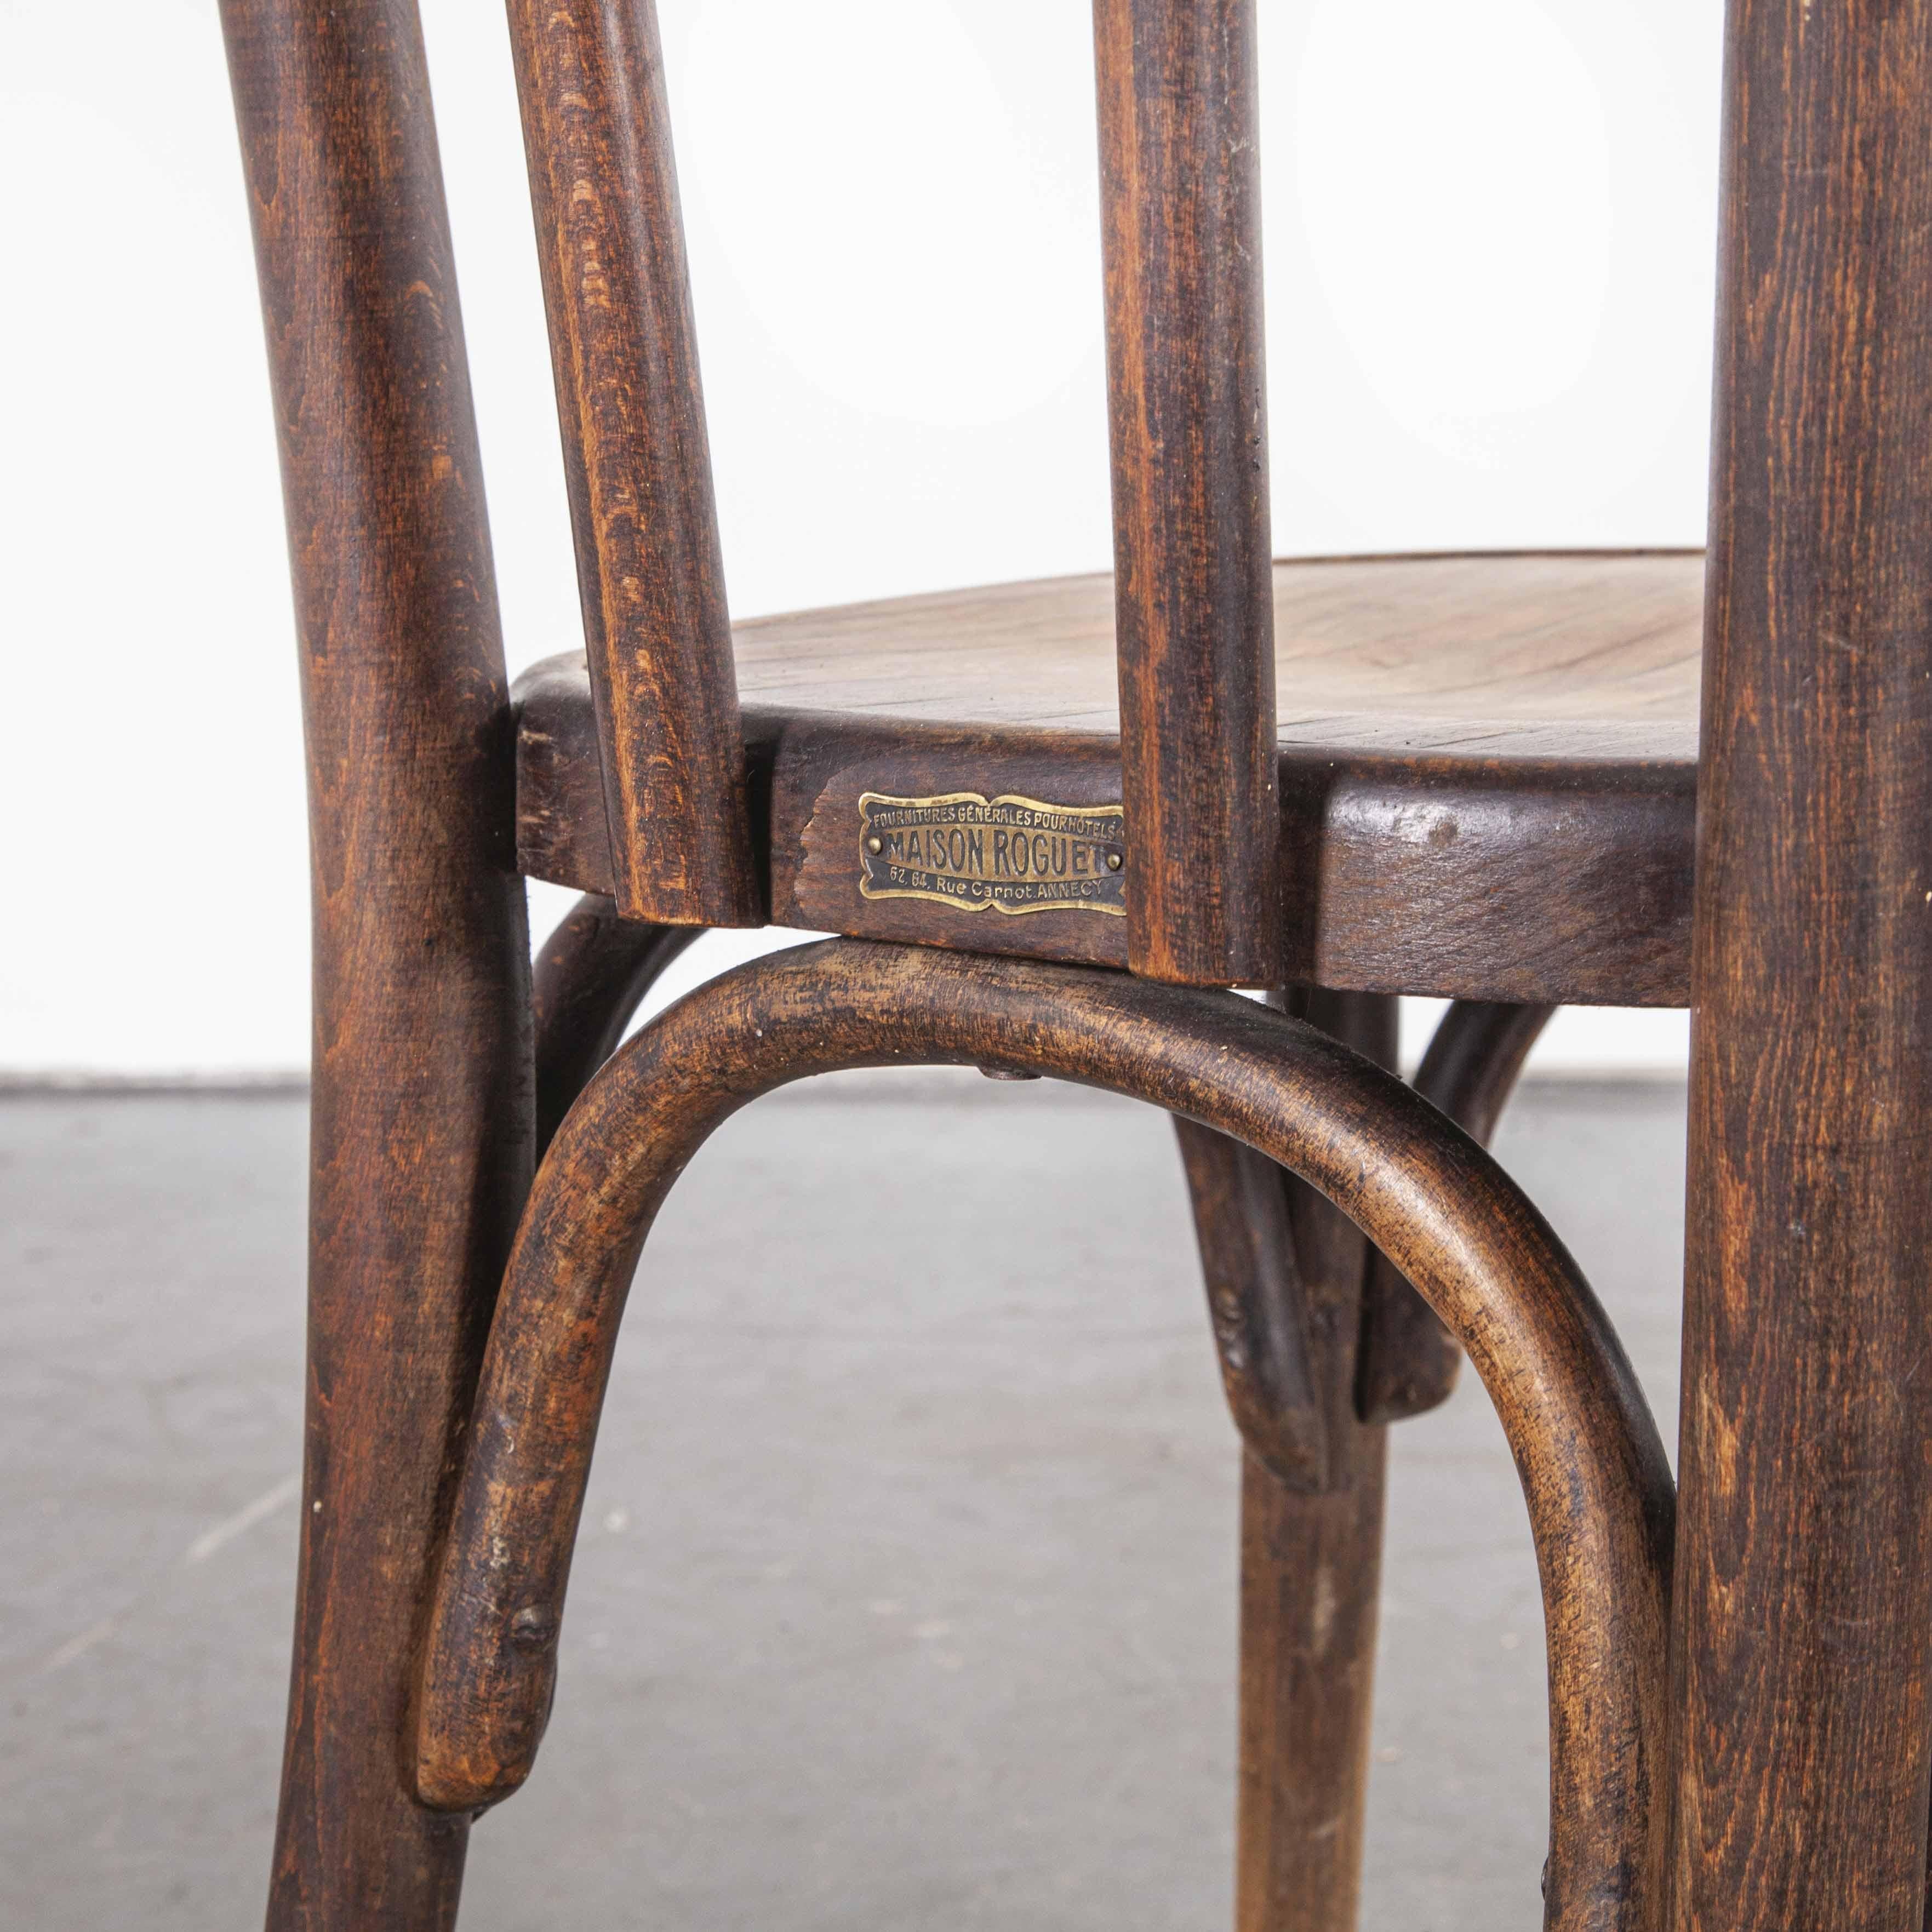 1920s Baumann bentwood bistro dining chair – Maison Rouget – Set of six
1920s Baumann bentwood bistro dining chair – Maison Rouget – set of six. Classic Beech bistro chair made in France by the maker Joamin Baumann. Baumann is a slightly off the